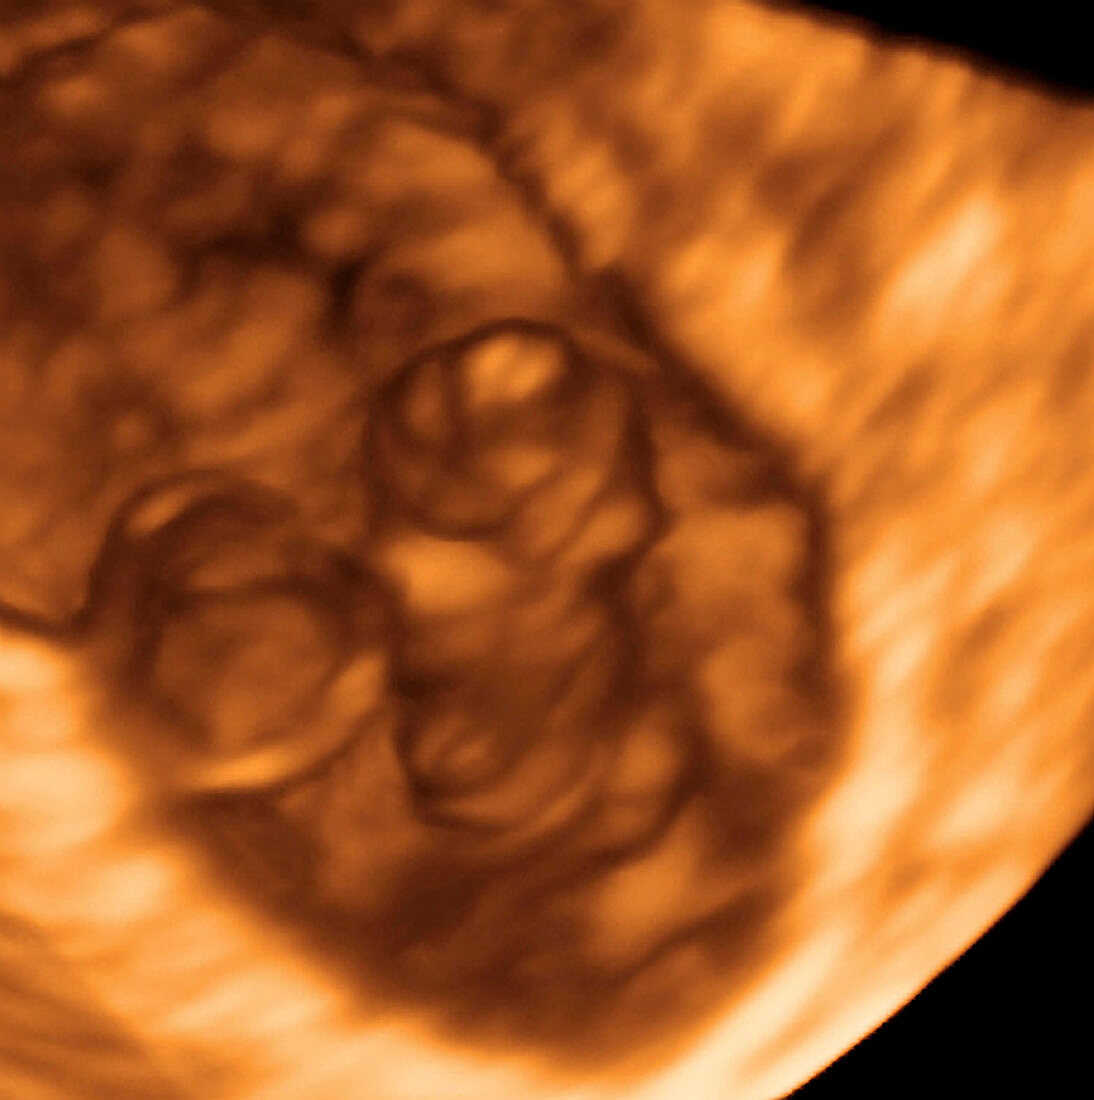 Embryo at 4 weeks,3-D ultrasound scan